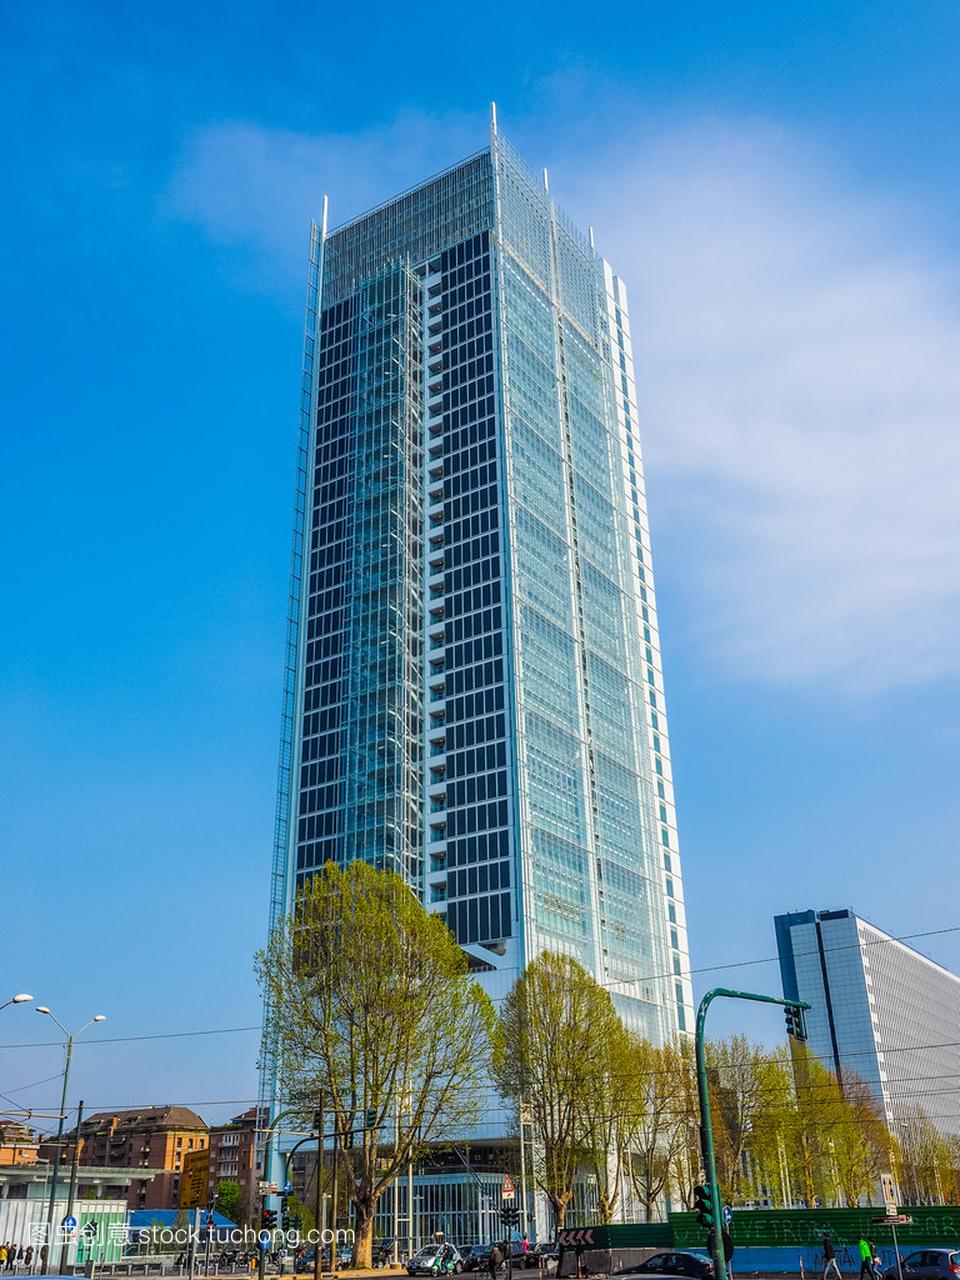 Intesa San Paolo skyscraper in Turin (HDR)